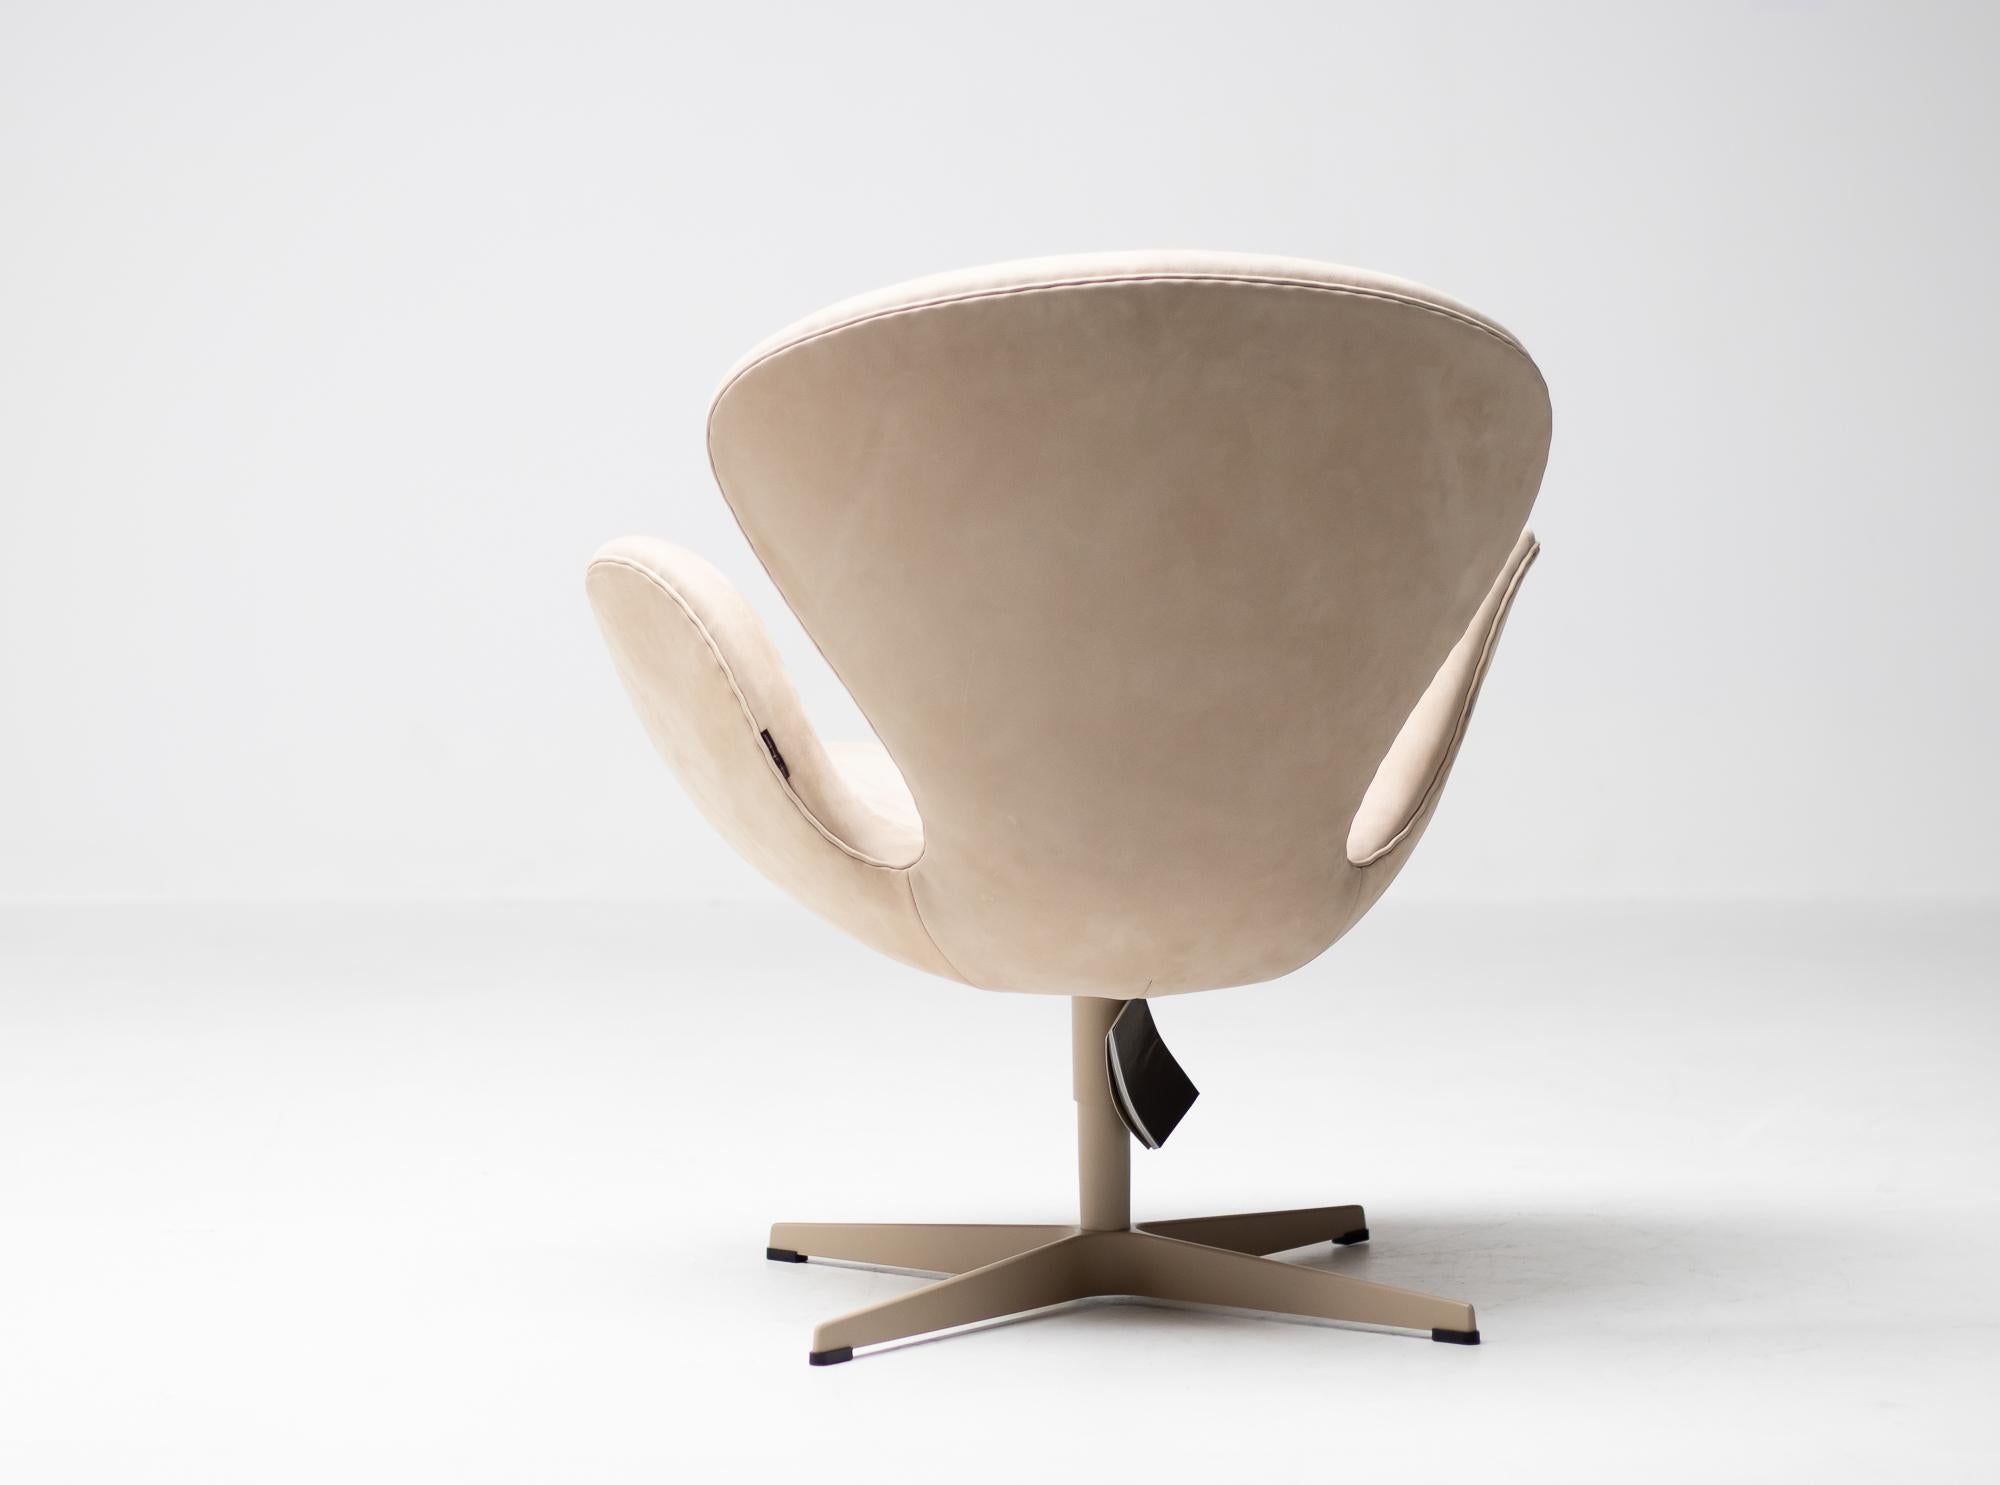 Danish Fritz Hansen’s Choice Limited Edition Swan Chair by Arne Jacobsen